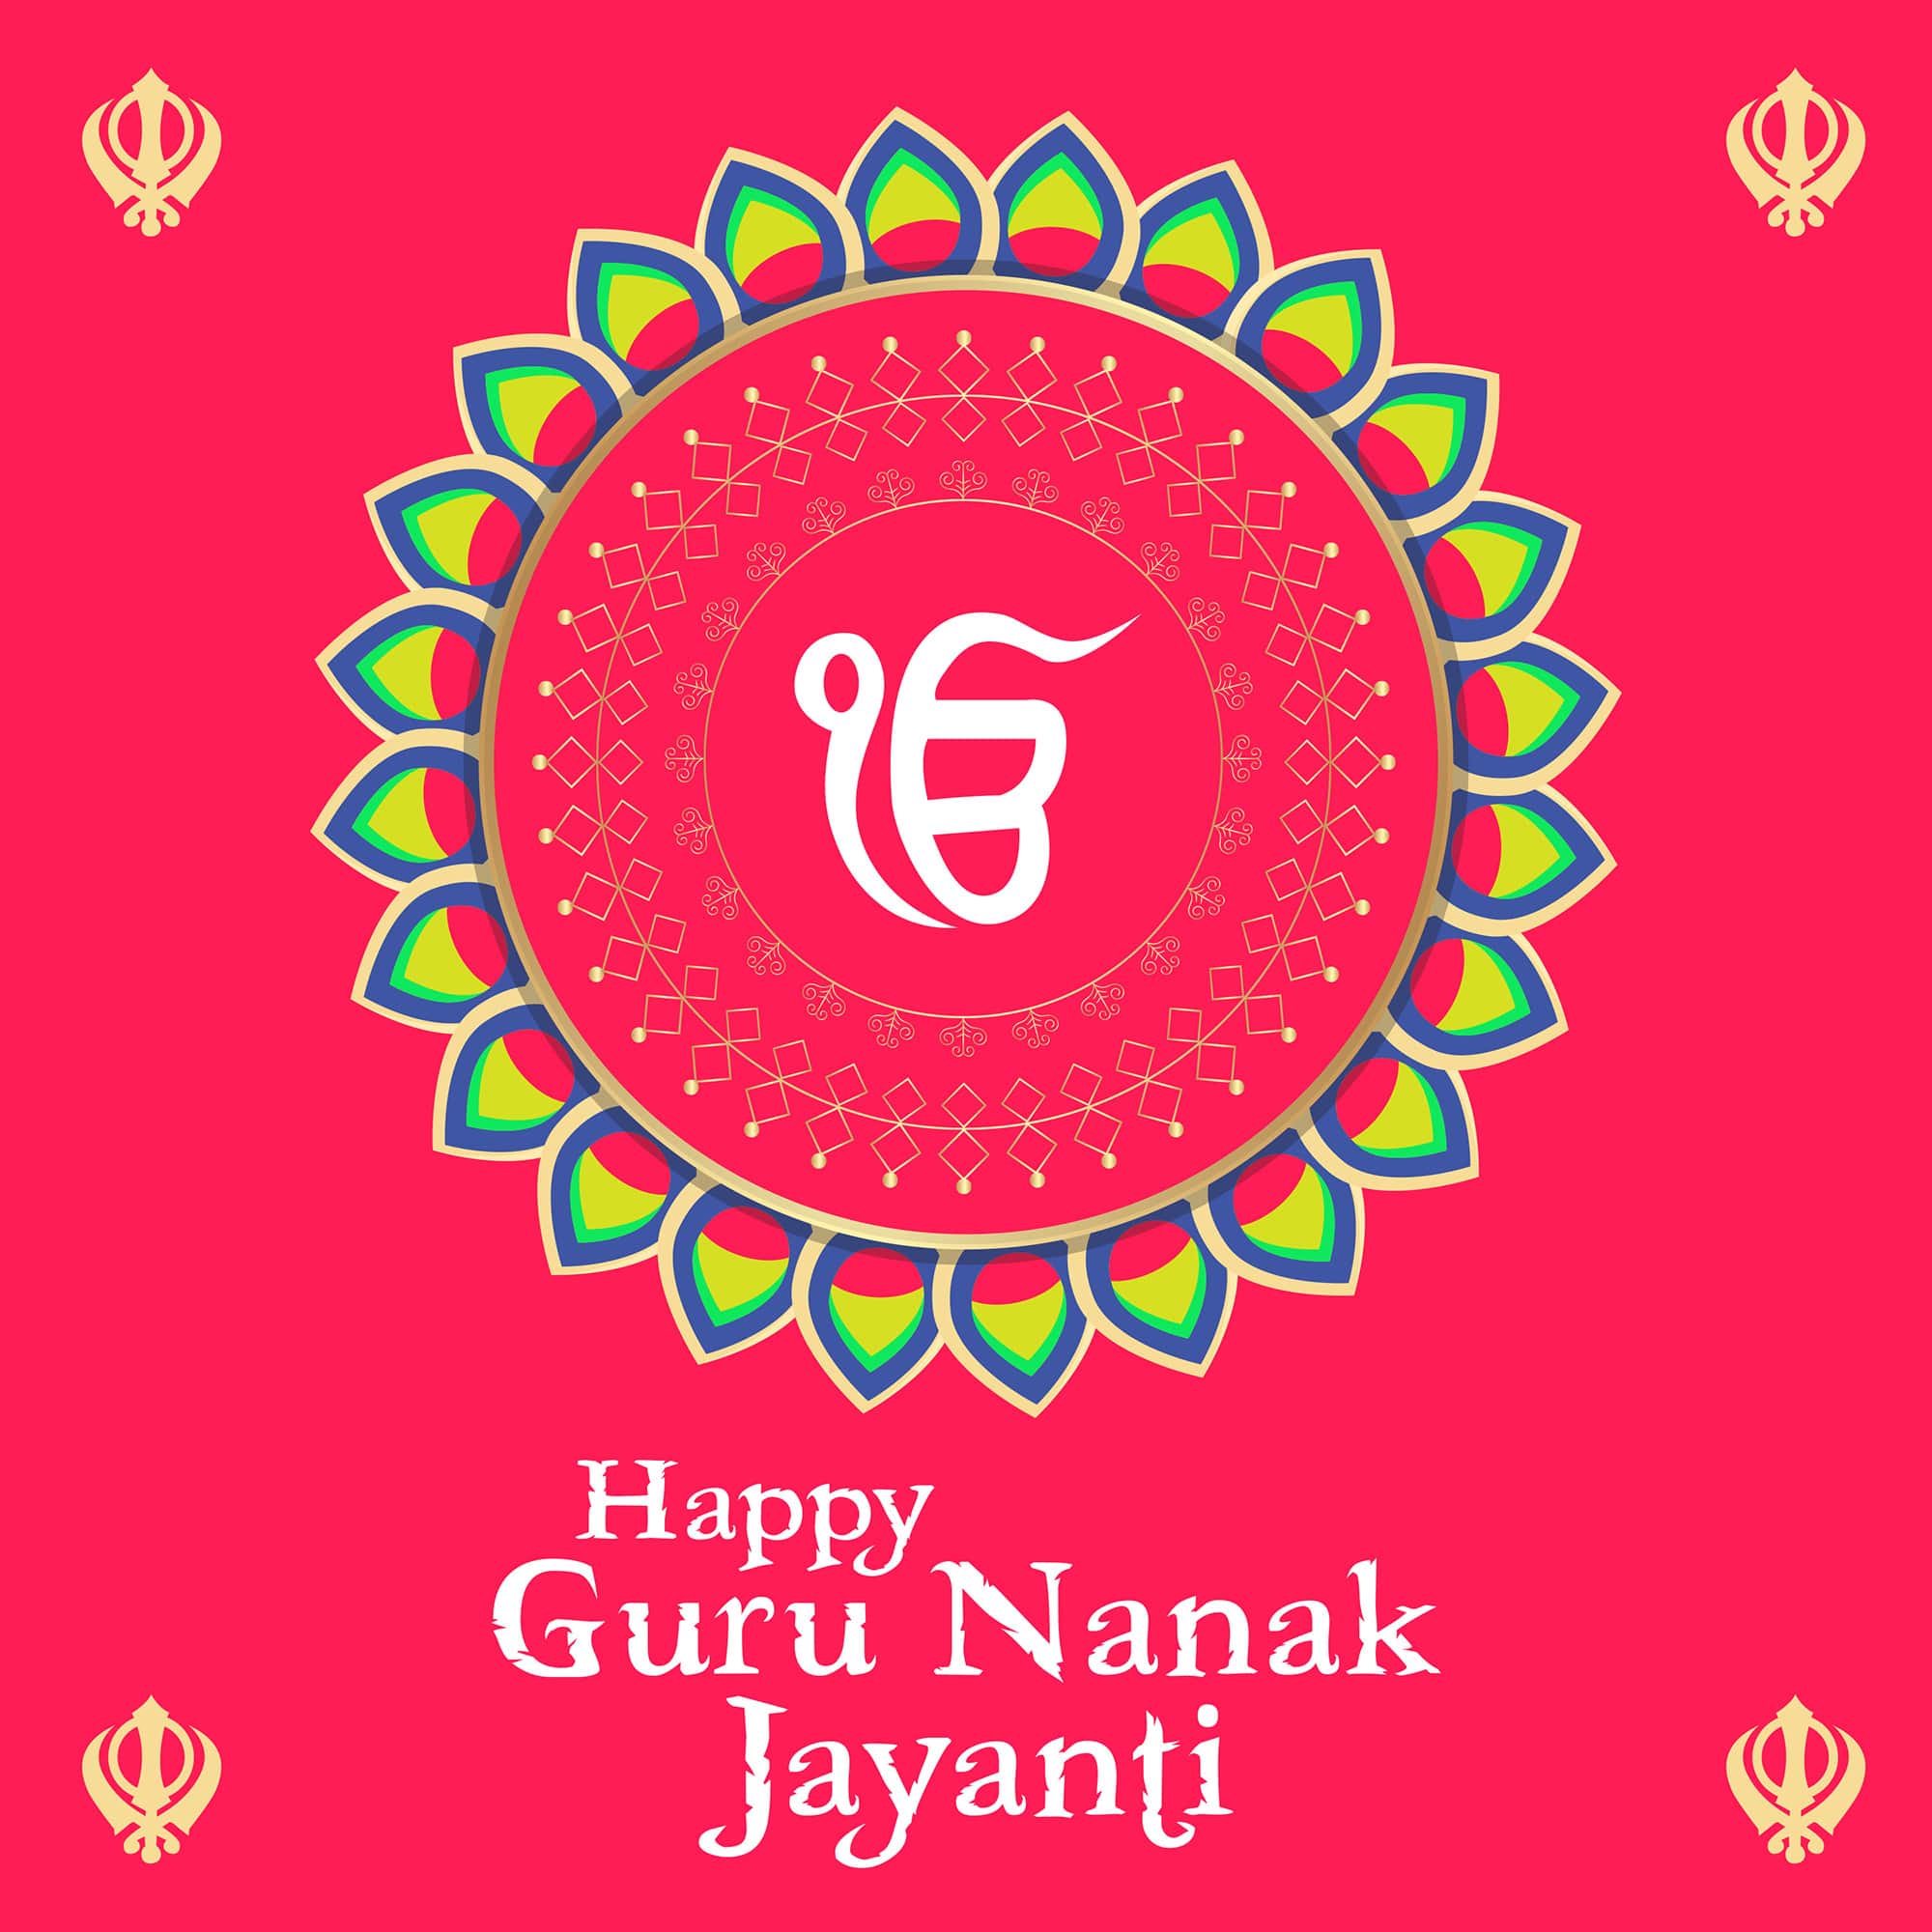 Creative Happy Guru Nanak Jayanti vector illustration template for free download